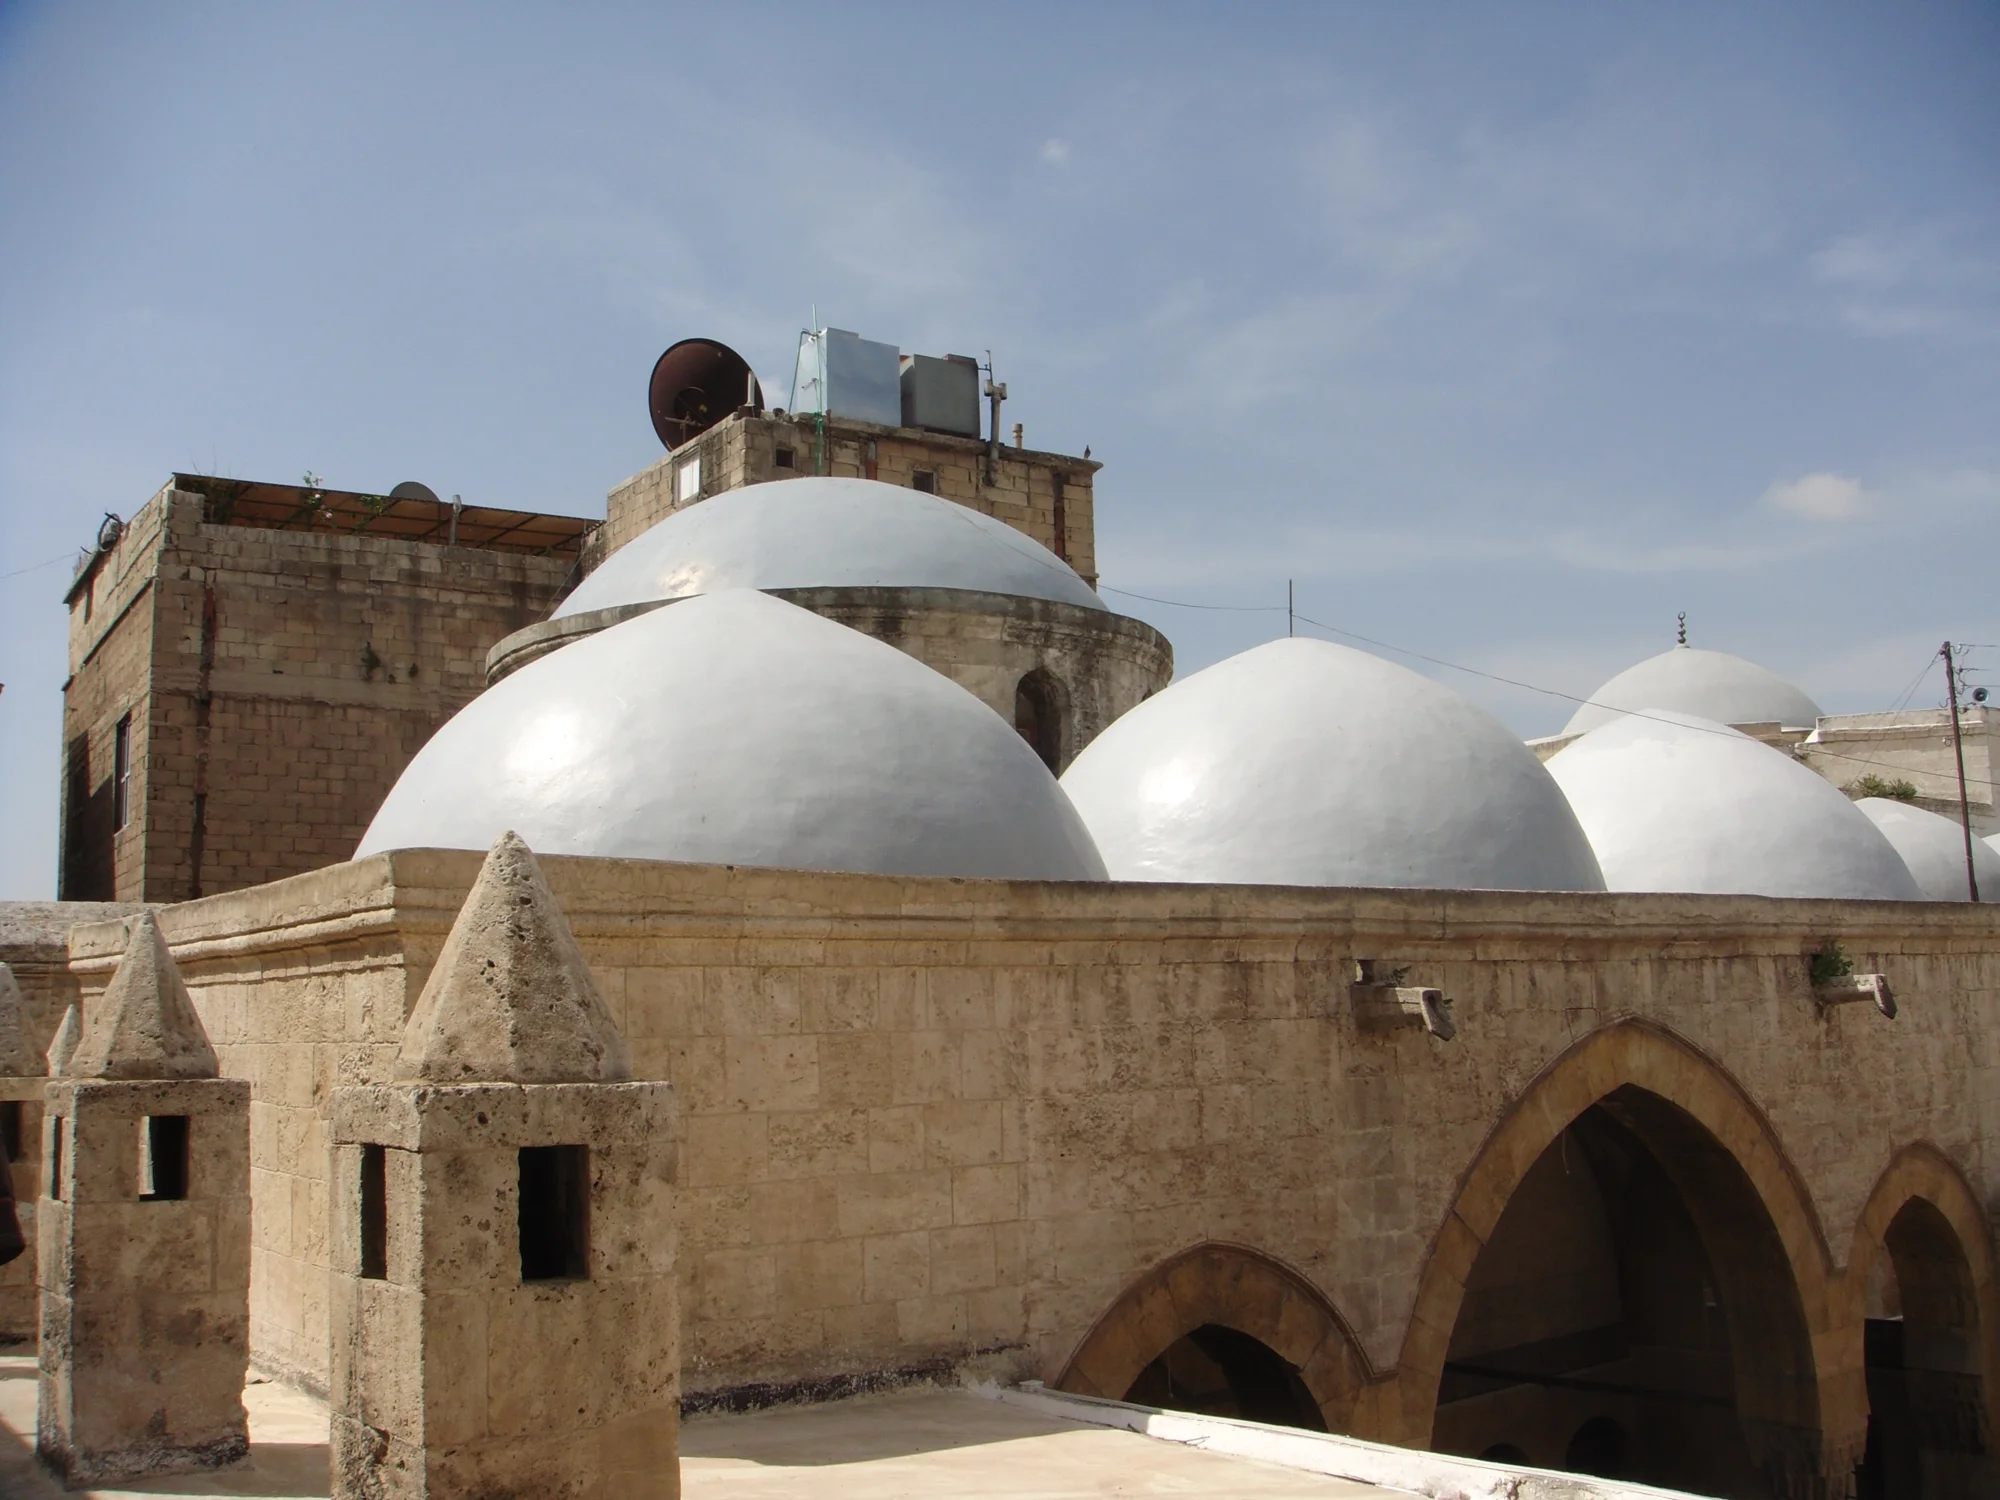 Al-Madrasa al-Ahmadiyya, domes of the prayer niche from the outside